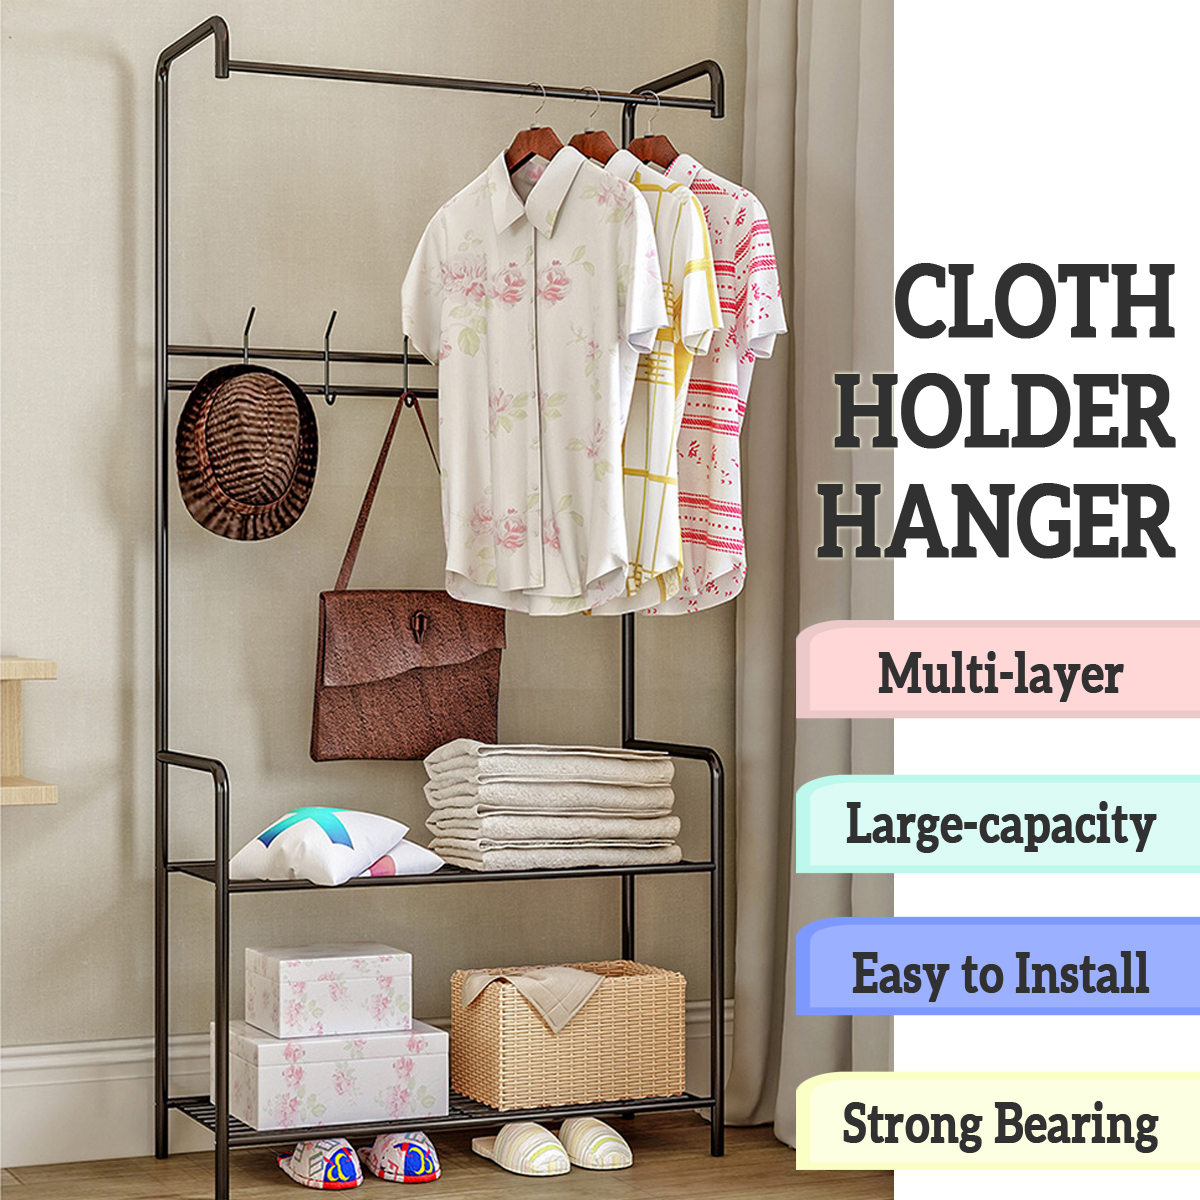 Standing-Landing-Clothing-Hanger-Holder-Iron-Metal-Clothes-Organizer-Shoes-Rack-1729980-1